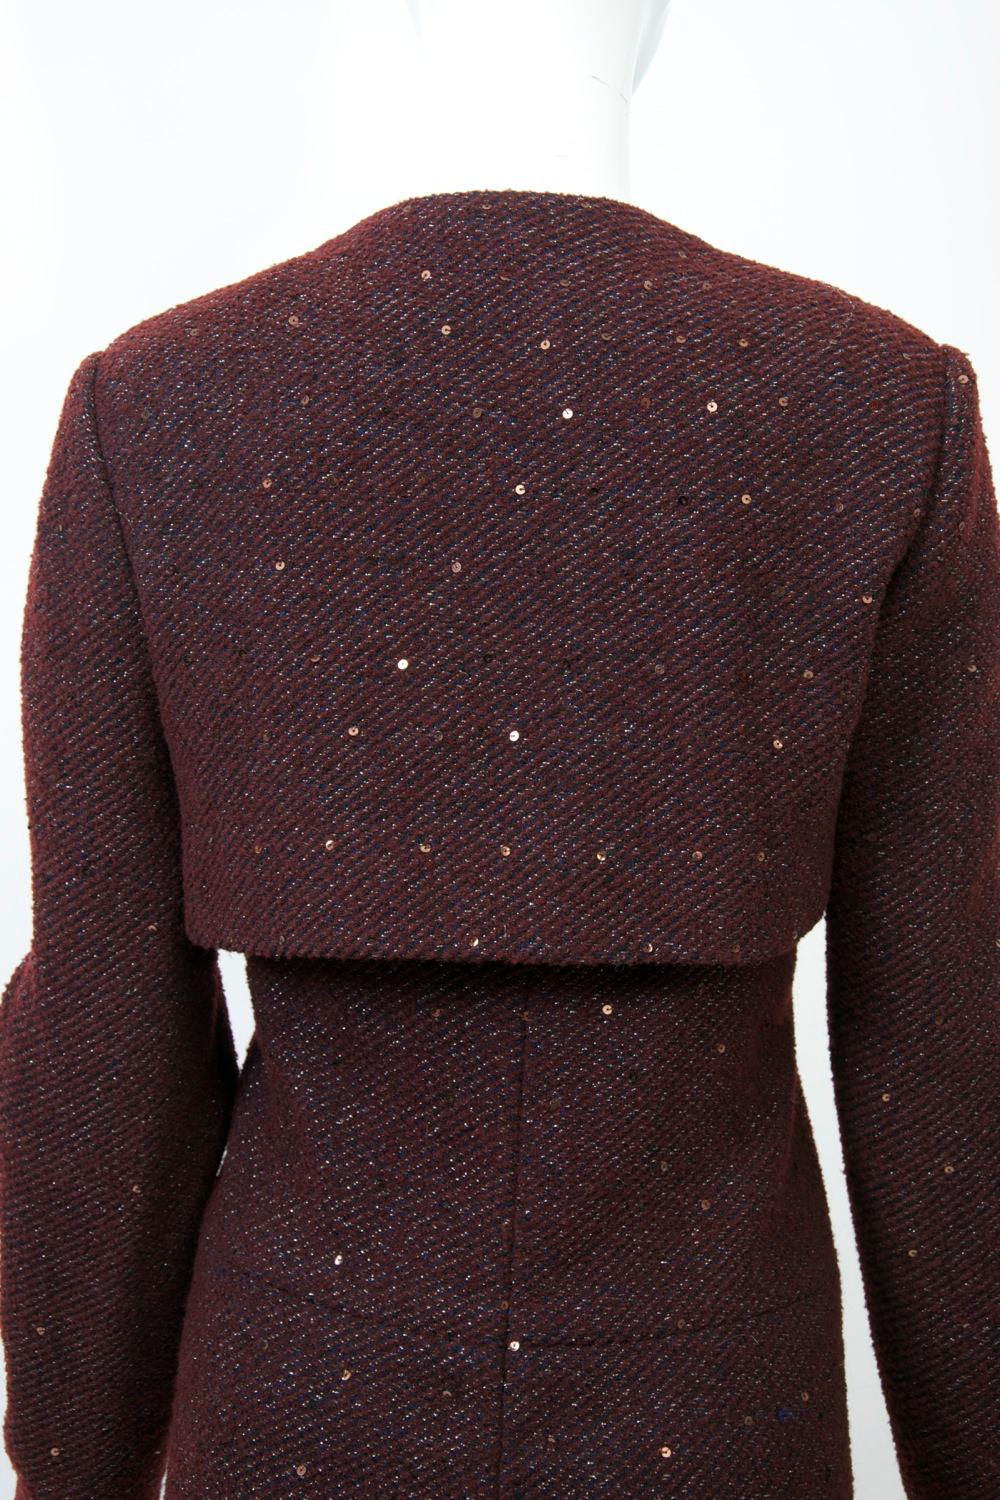 Geoffrey Beene Burgundy/Metallic Dress and Jacket 1